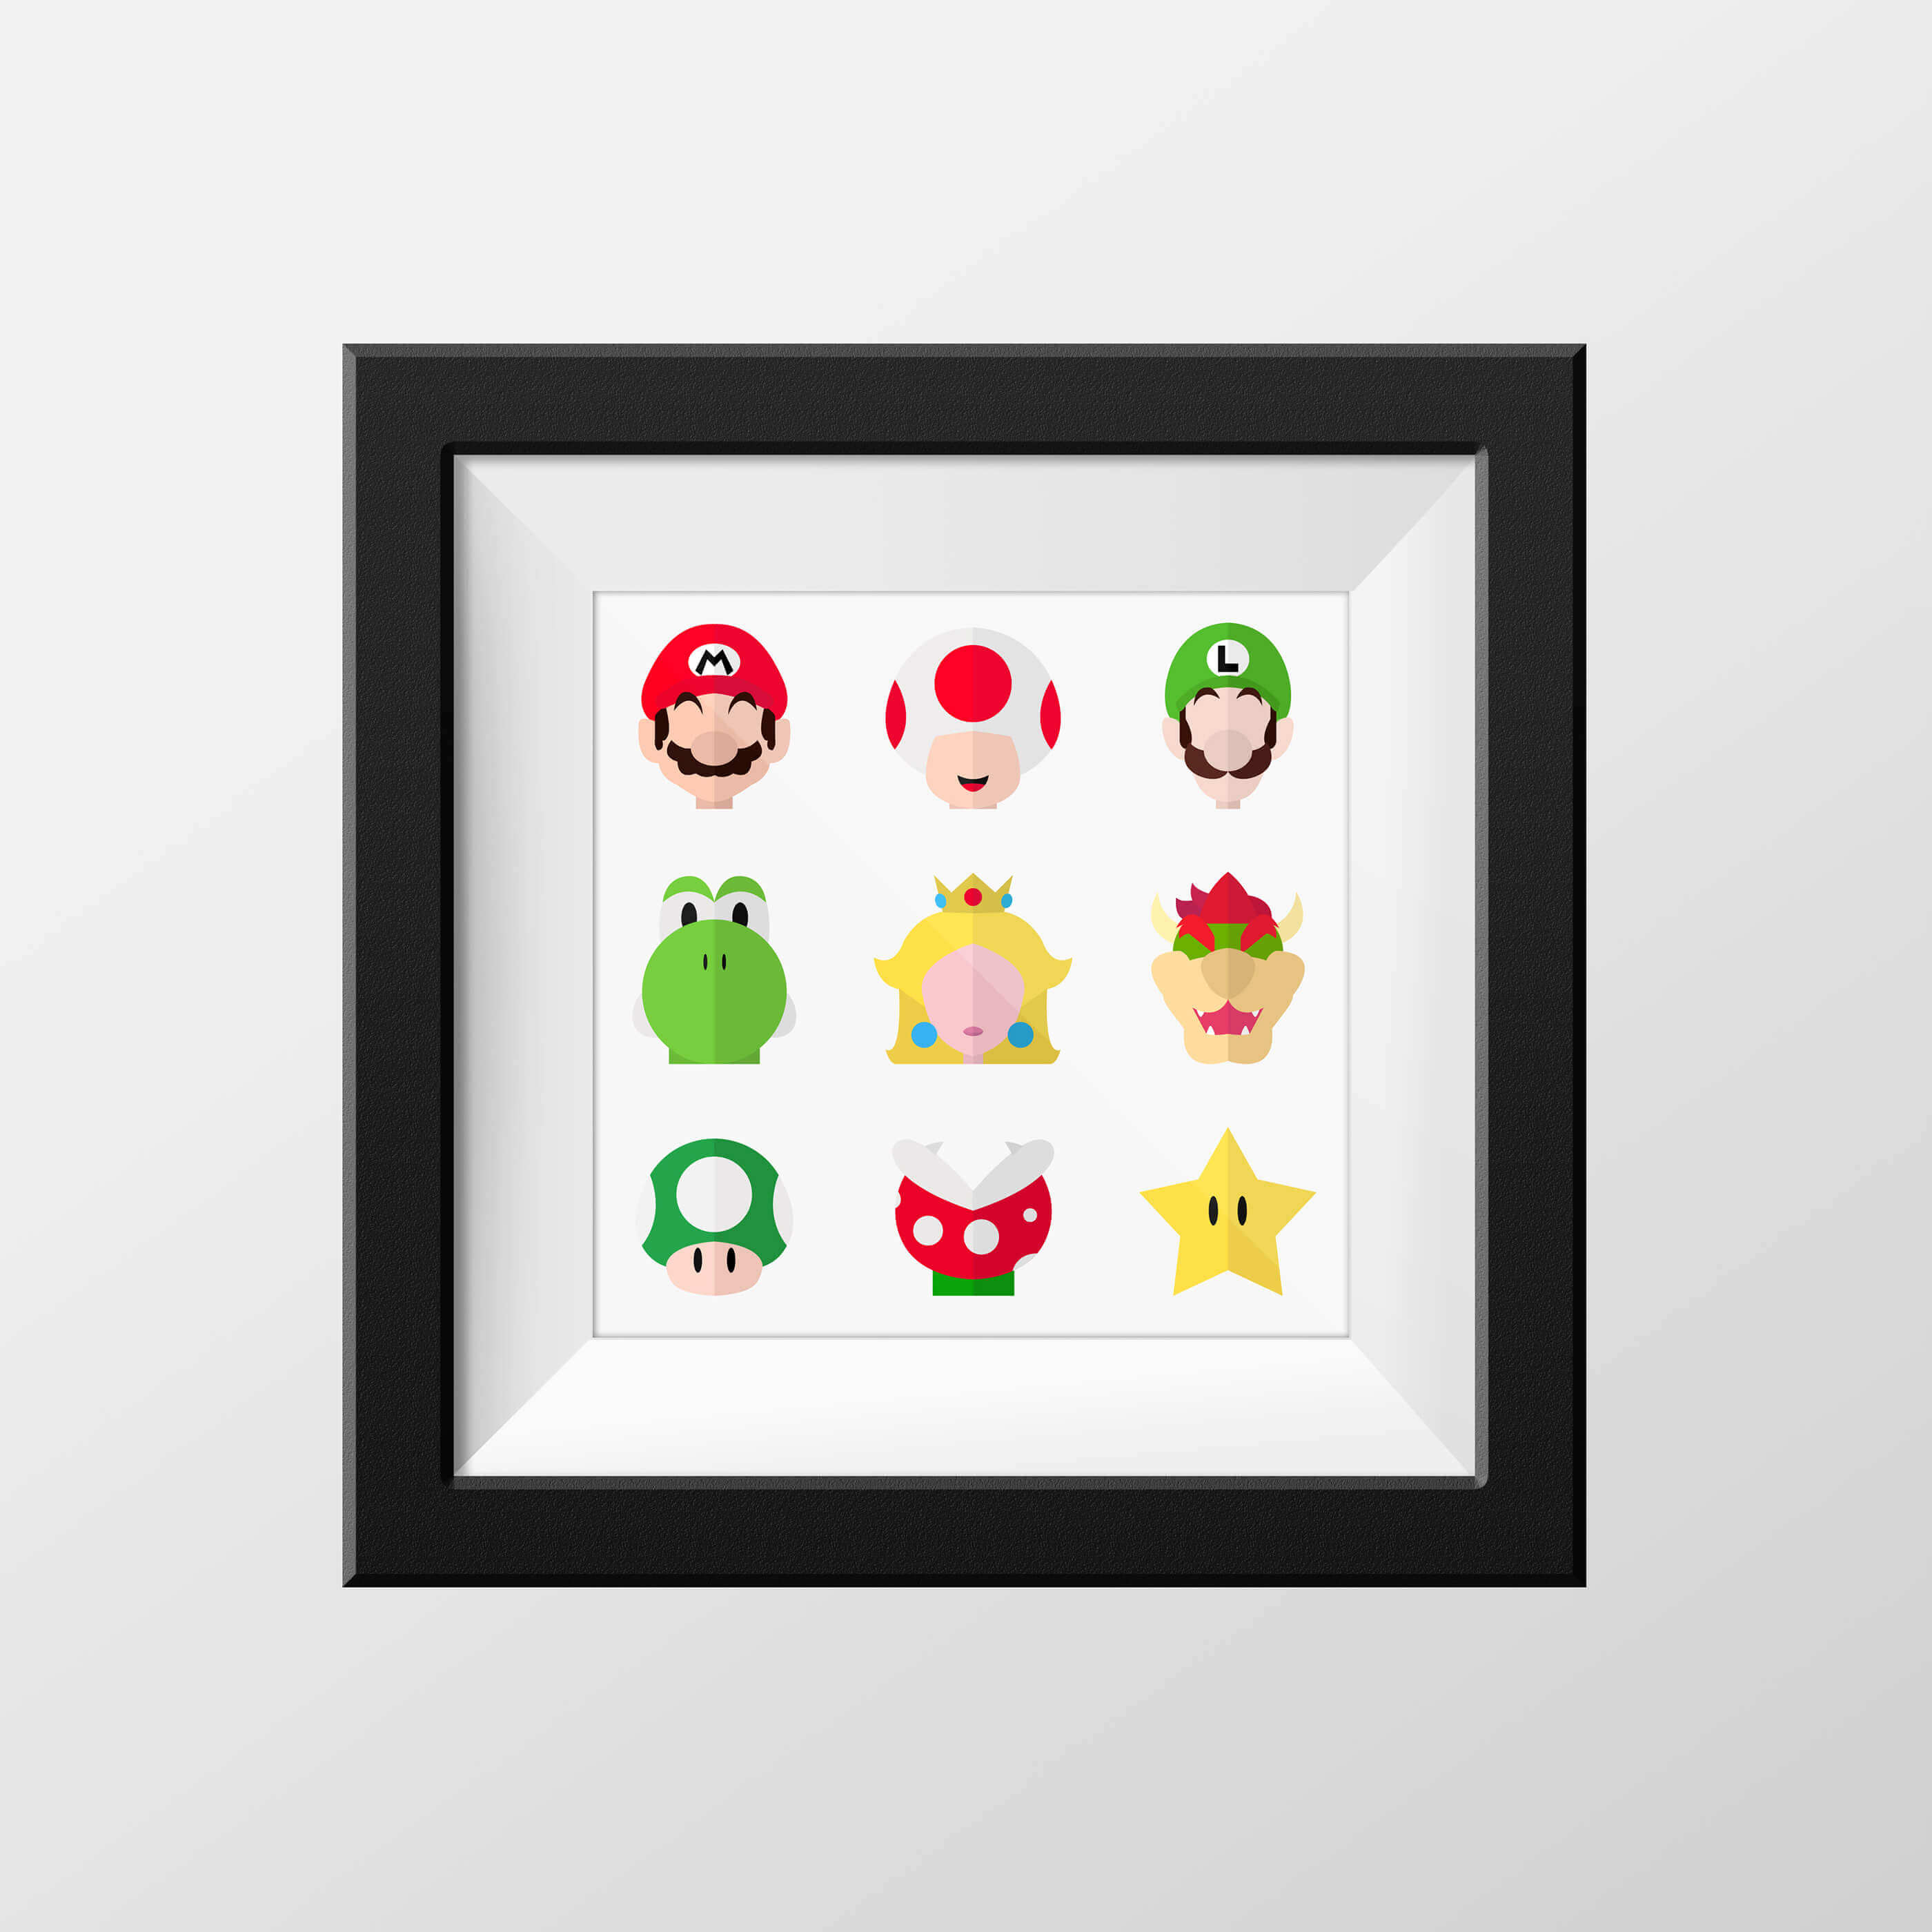 Flat illustration of Mario Bros characters